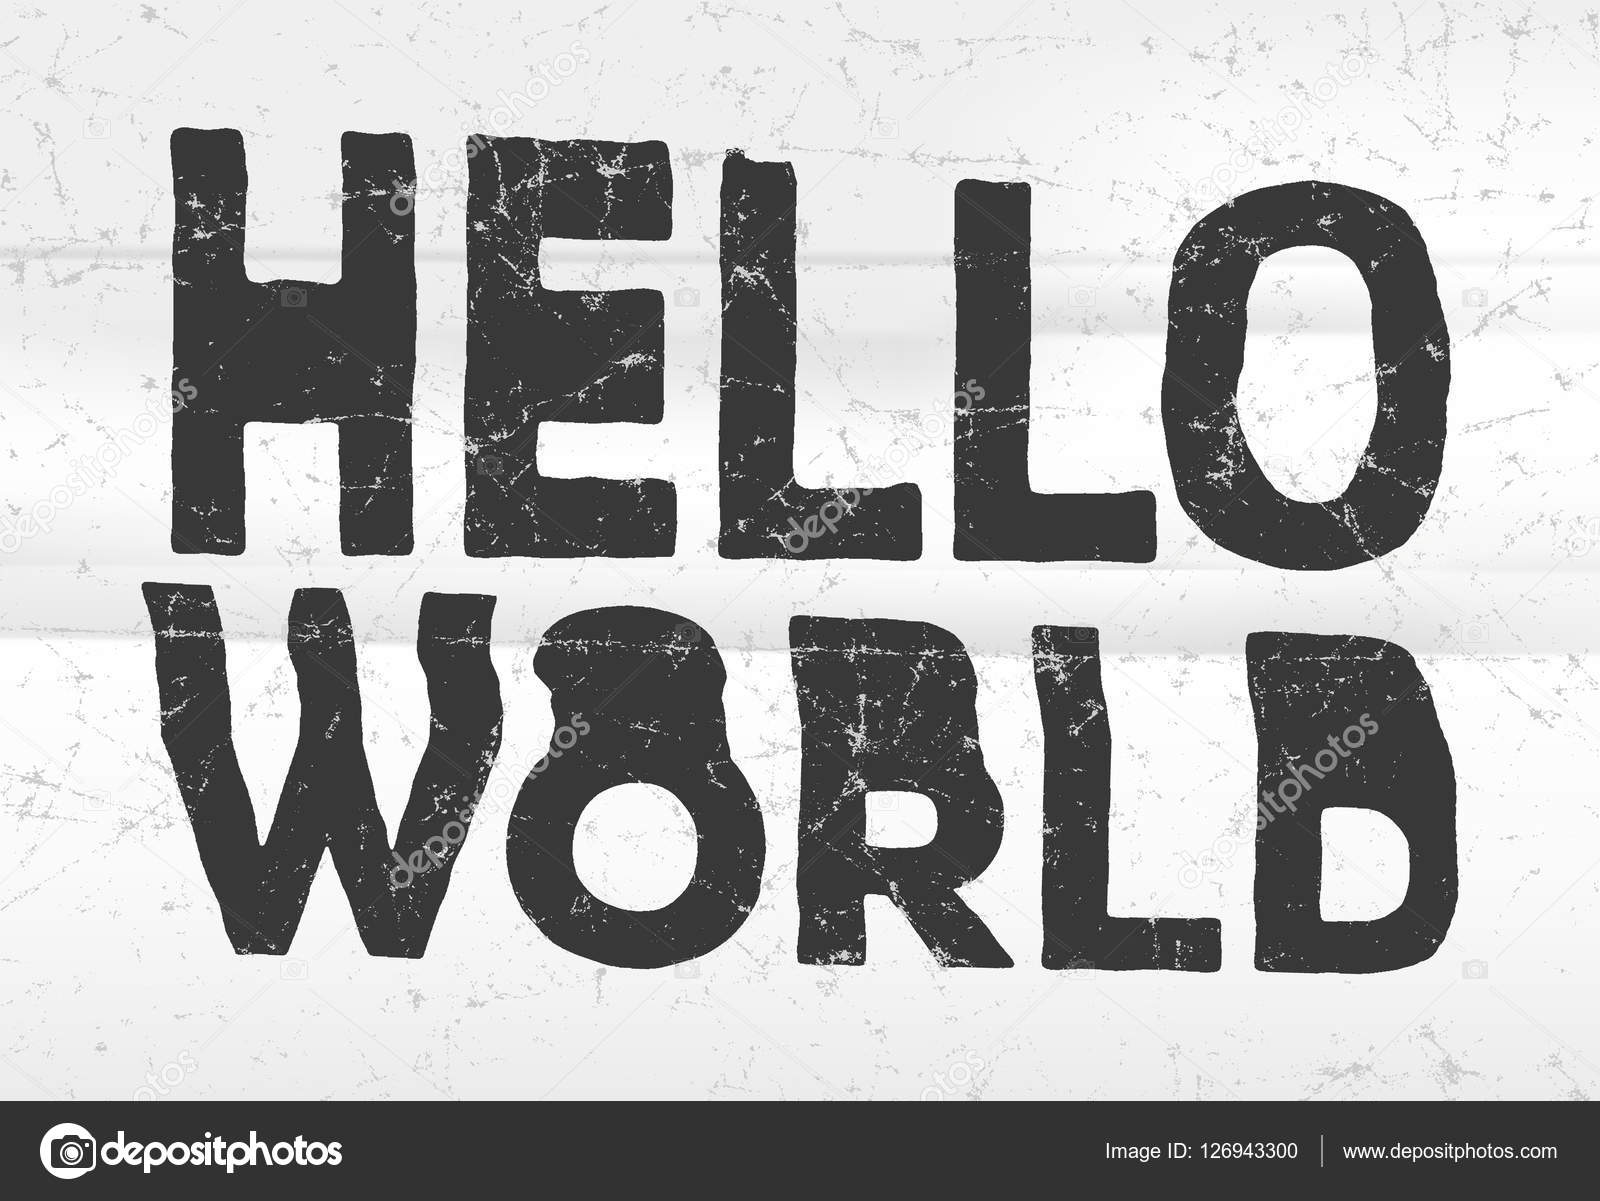 Customizable 'Hello World' Birth Announcement on Premium Cardstock